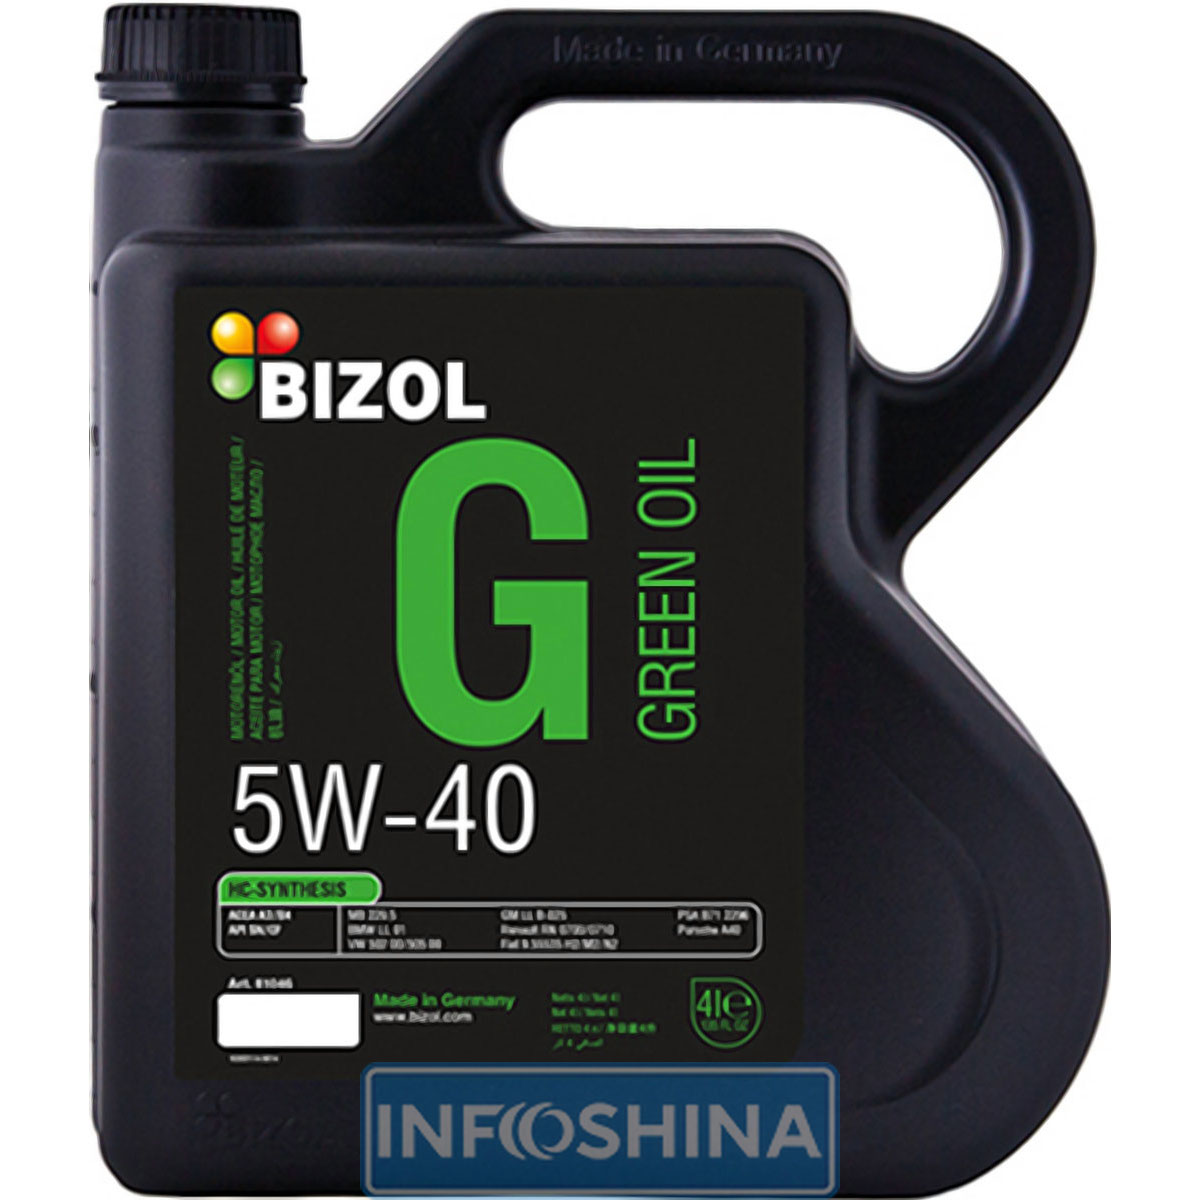 Bizol Green Oil 5W-40